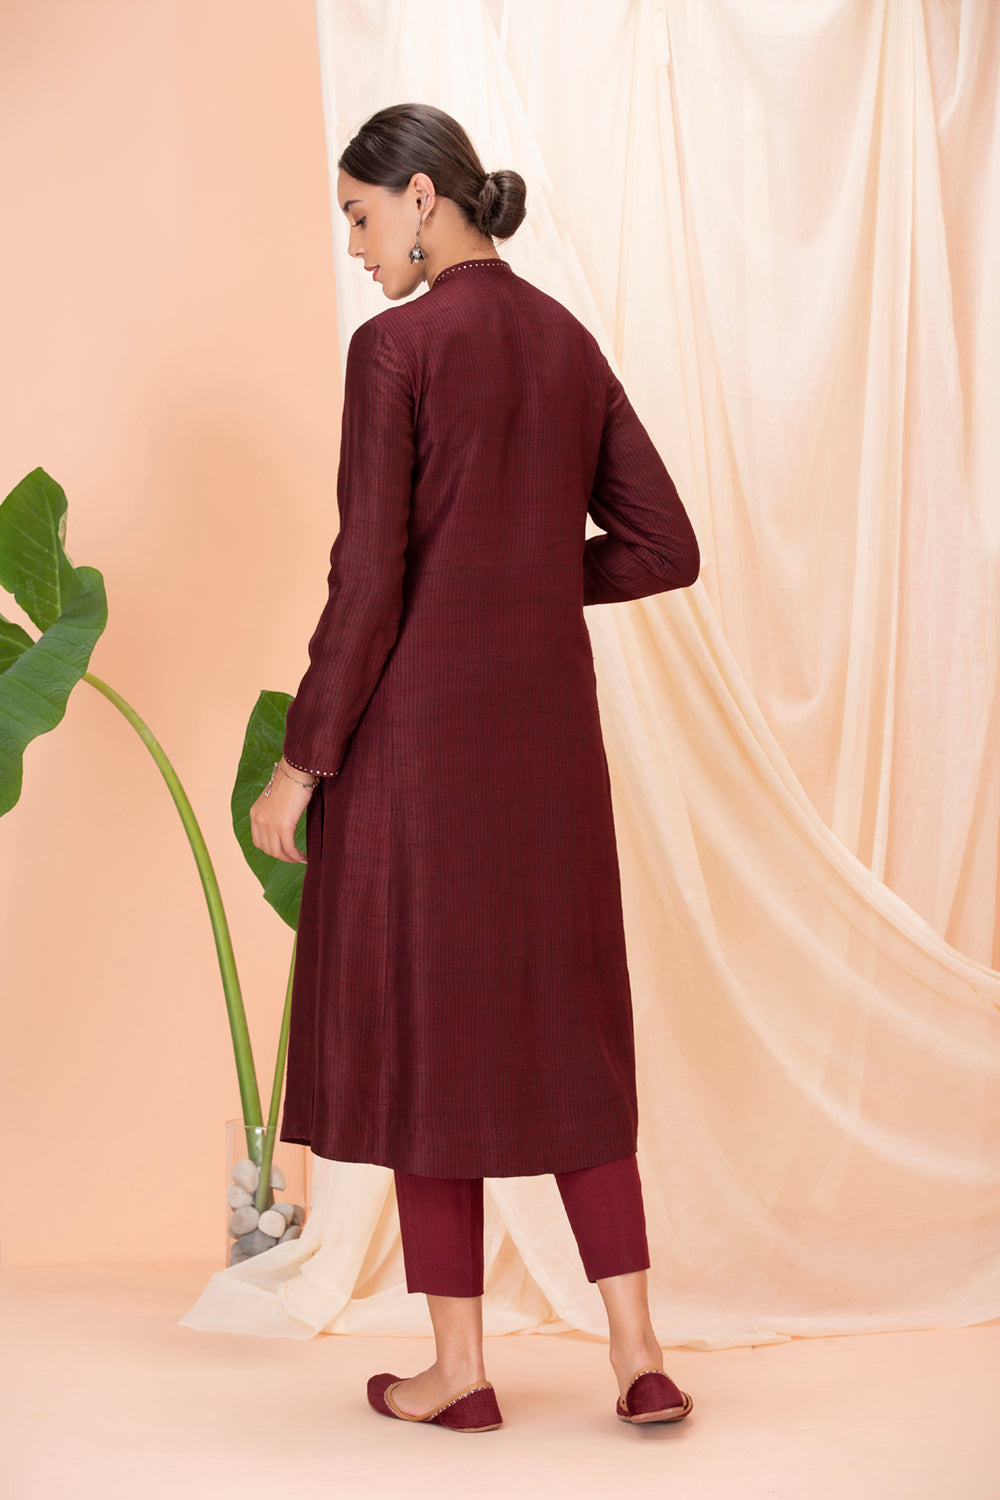 Buy AKS Couture Women's Silk Kurta Sets (SS2019_Grey_Medium) at Amazon.in